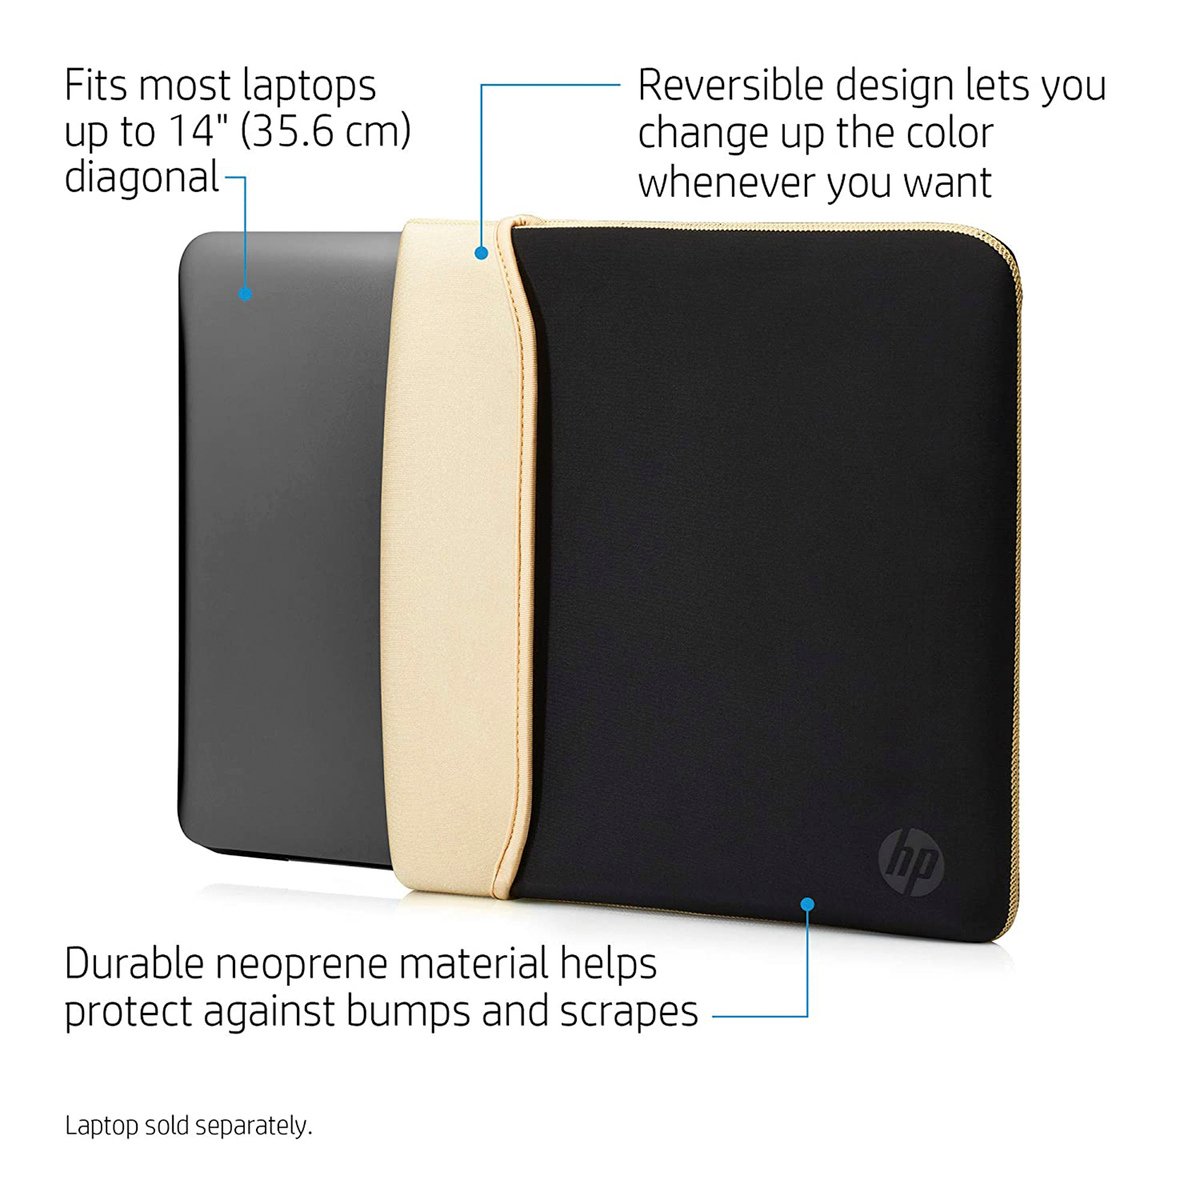 HP Neoprene Durable Zipperless Reversible Sleeve i2UF59AA 14"